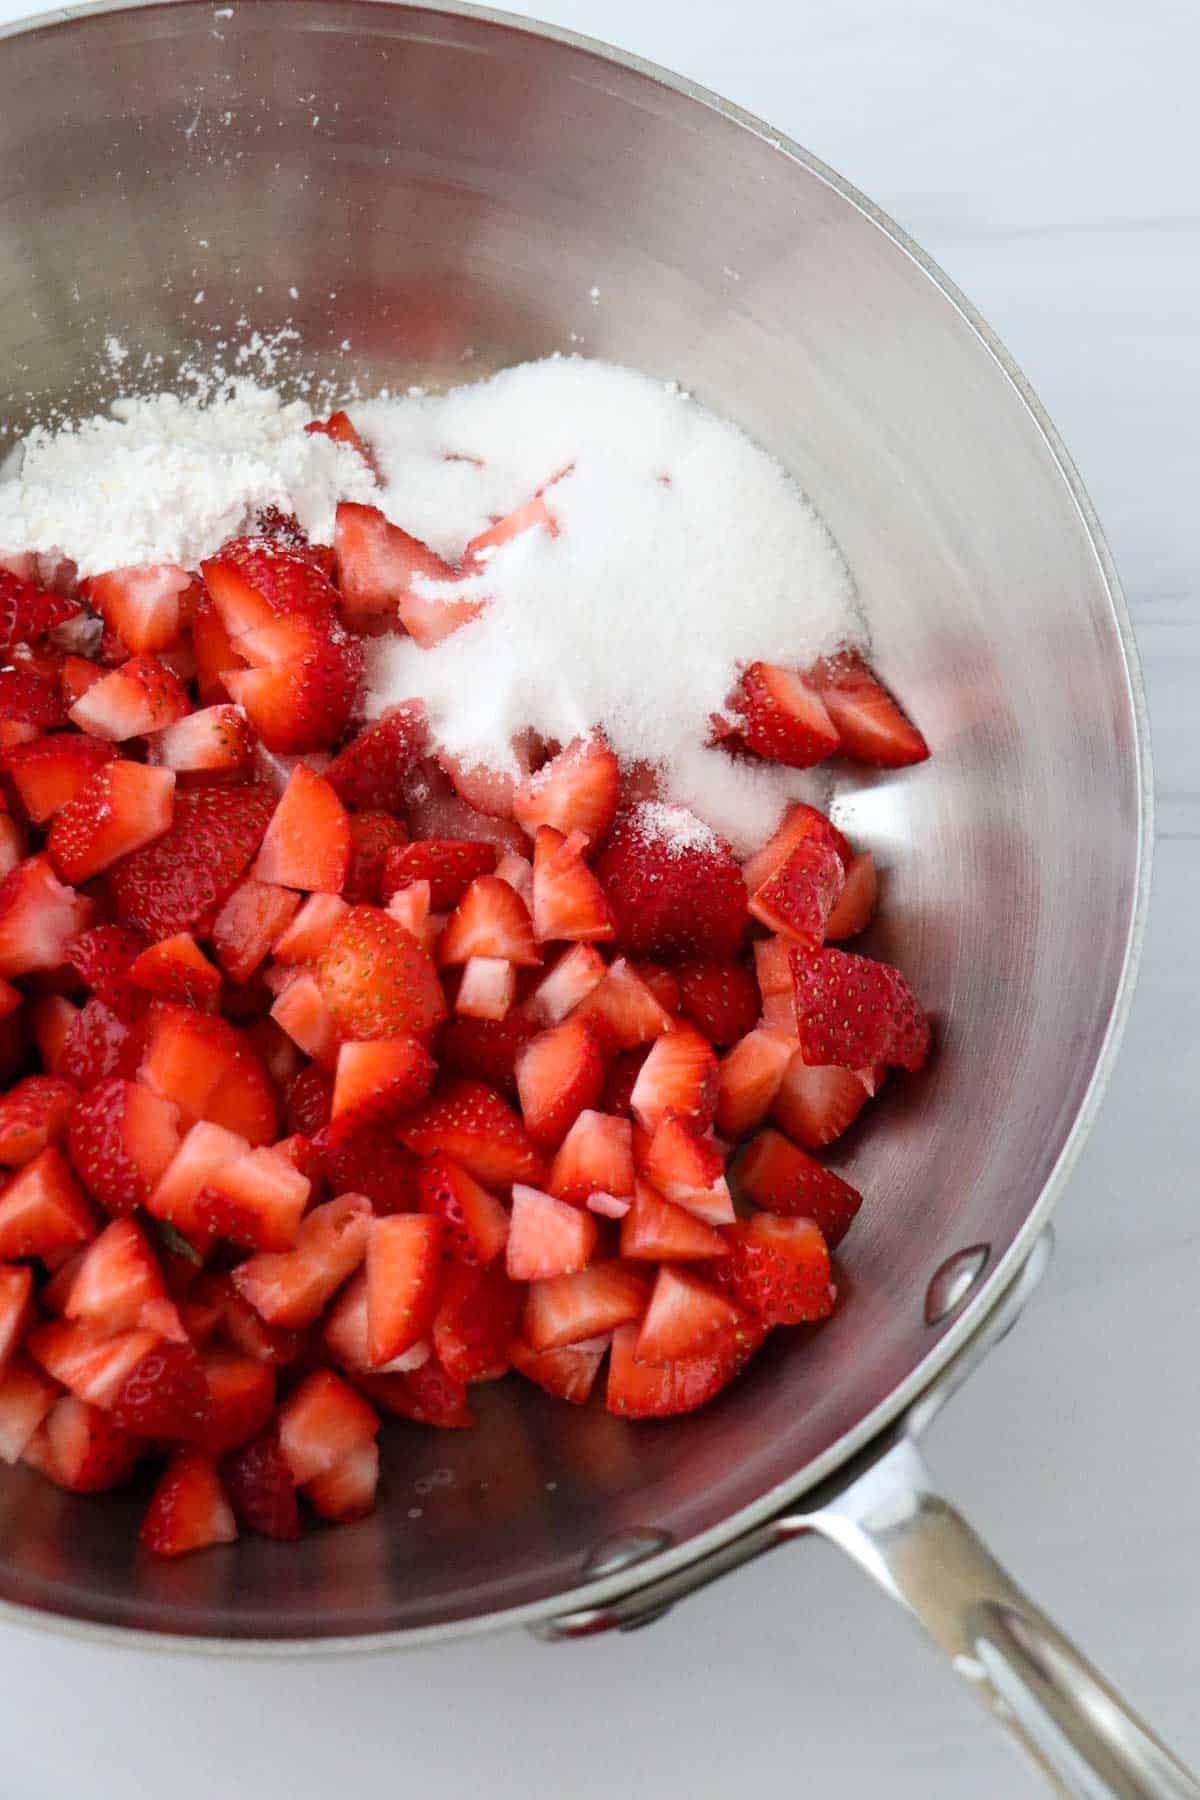 Cut up strawberries, sugar and cornstarch in a saucepan.